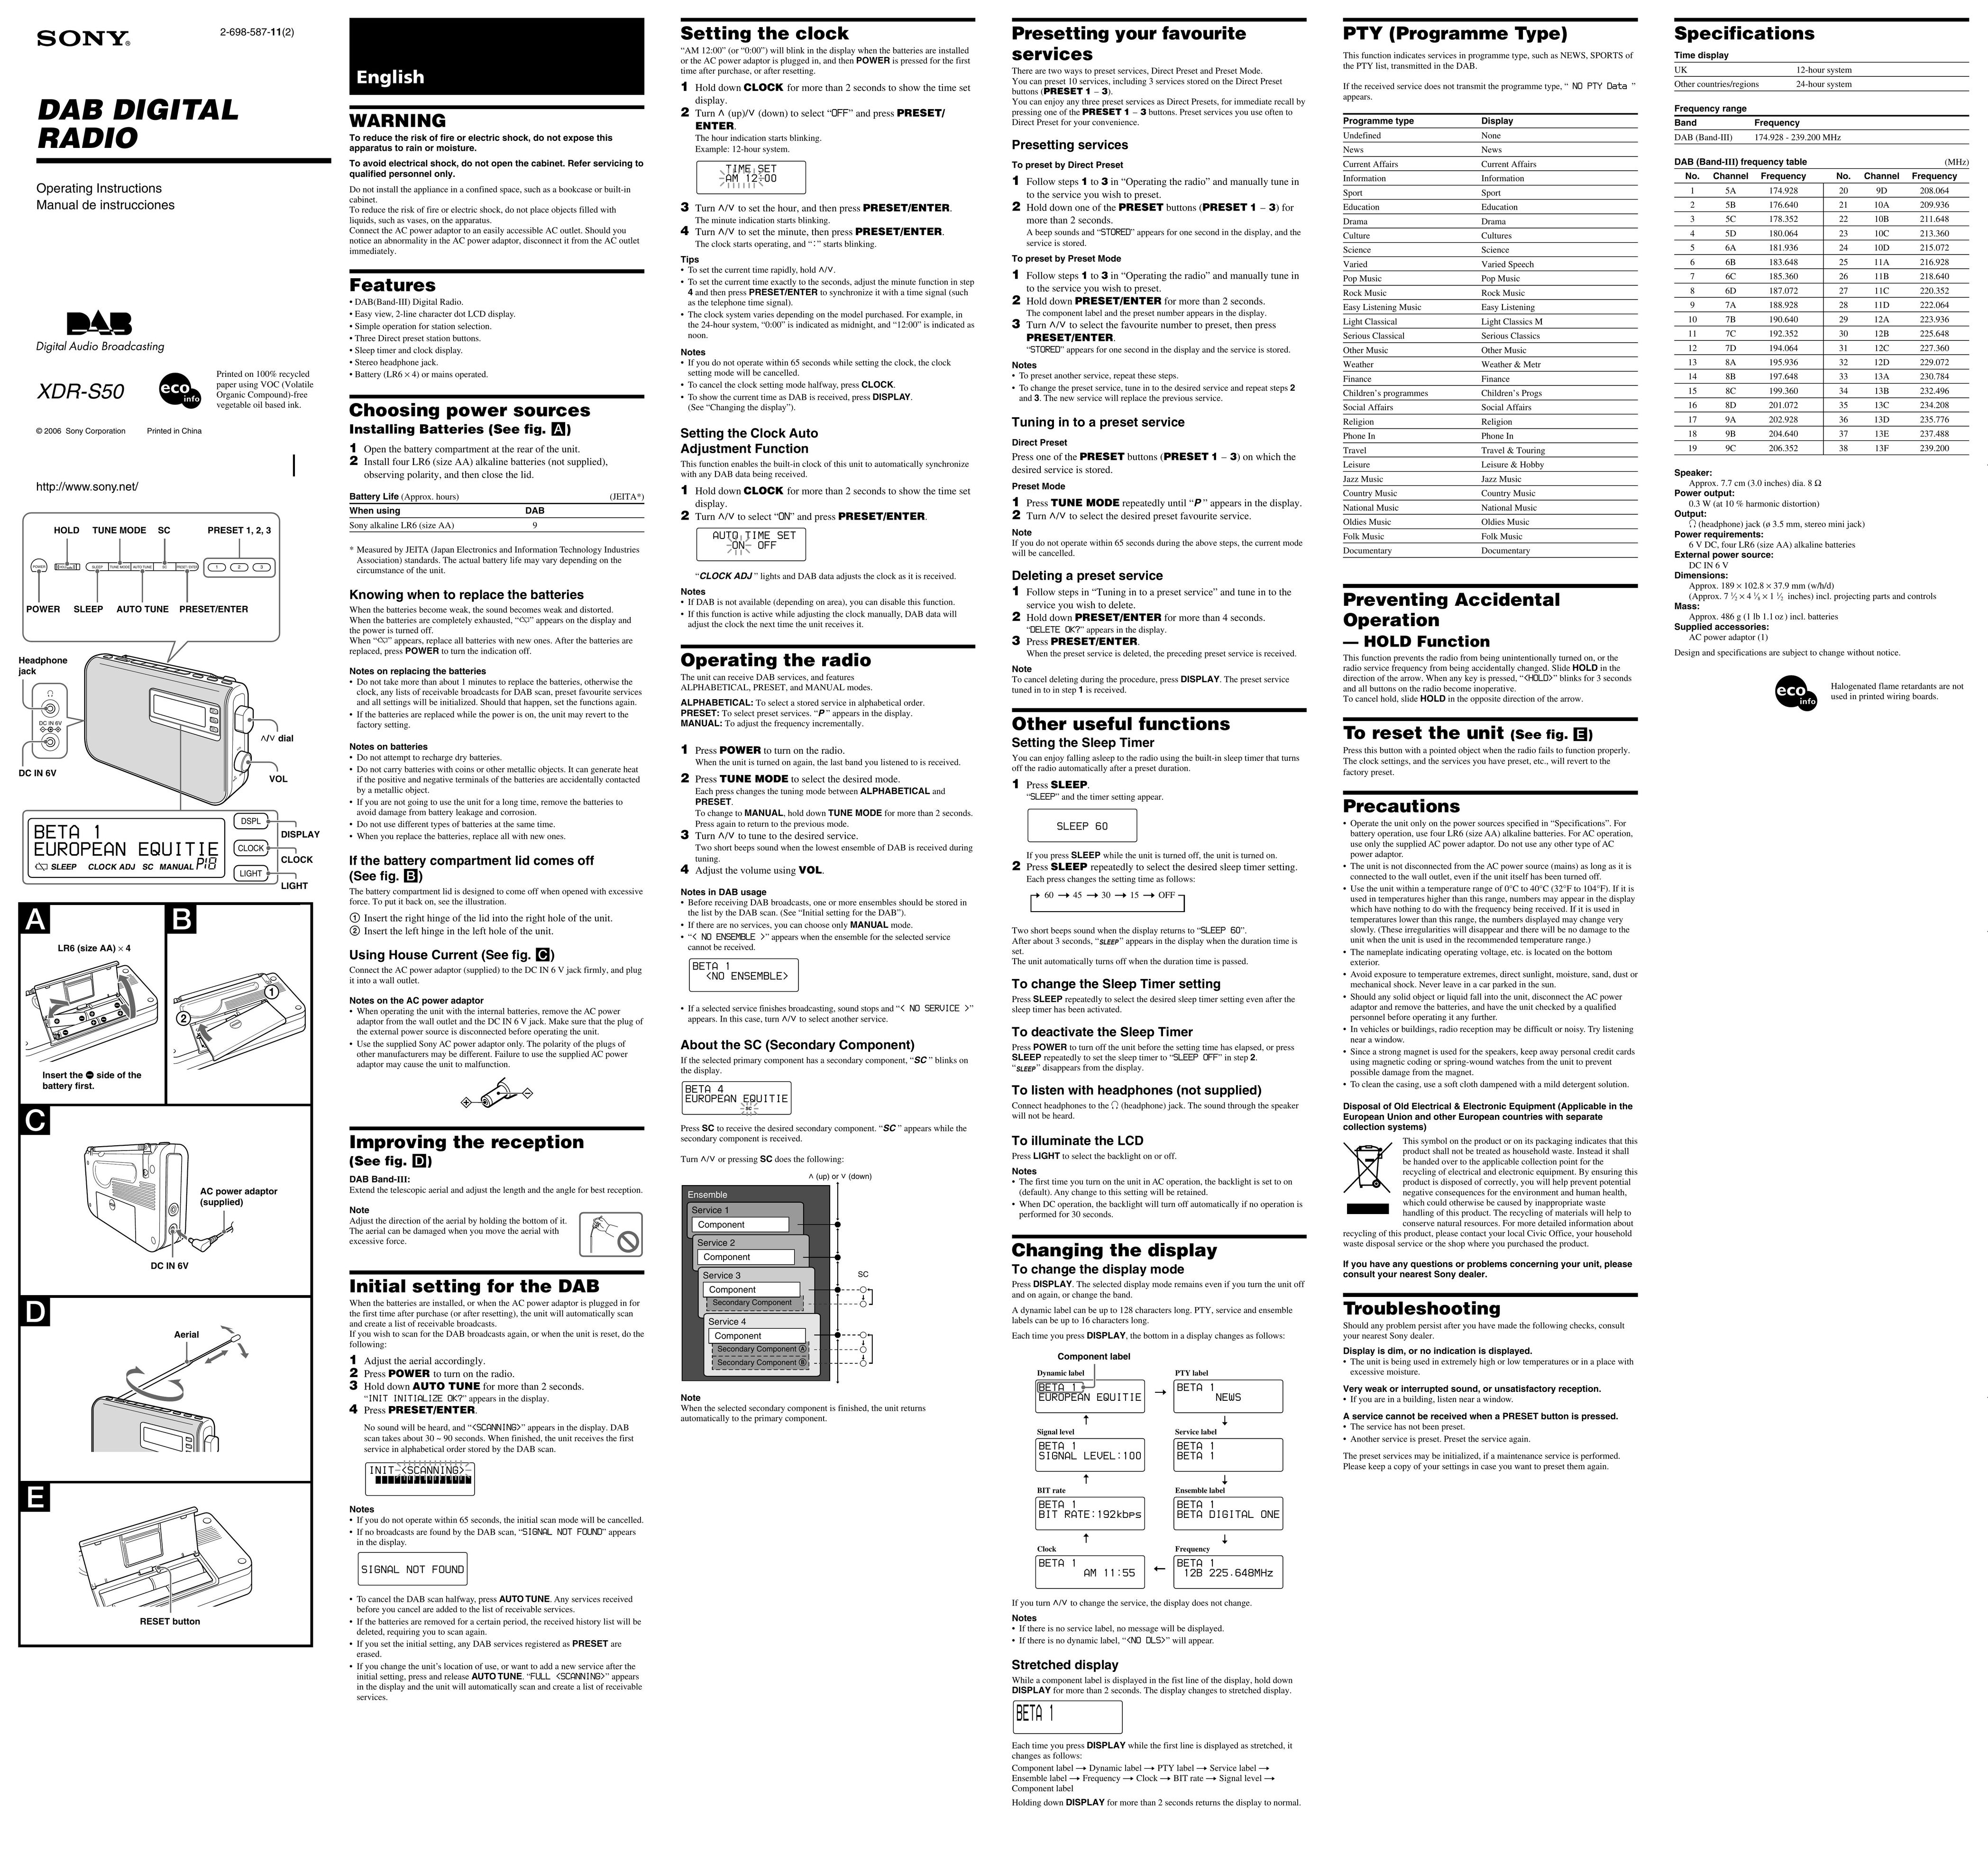 Sony XDR-S50 Portable Radio User Manual